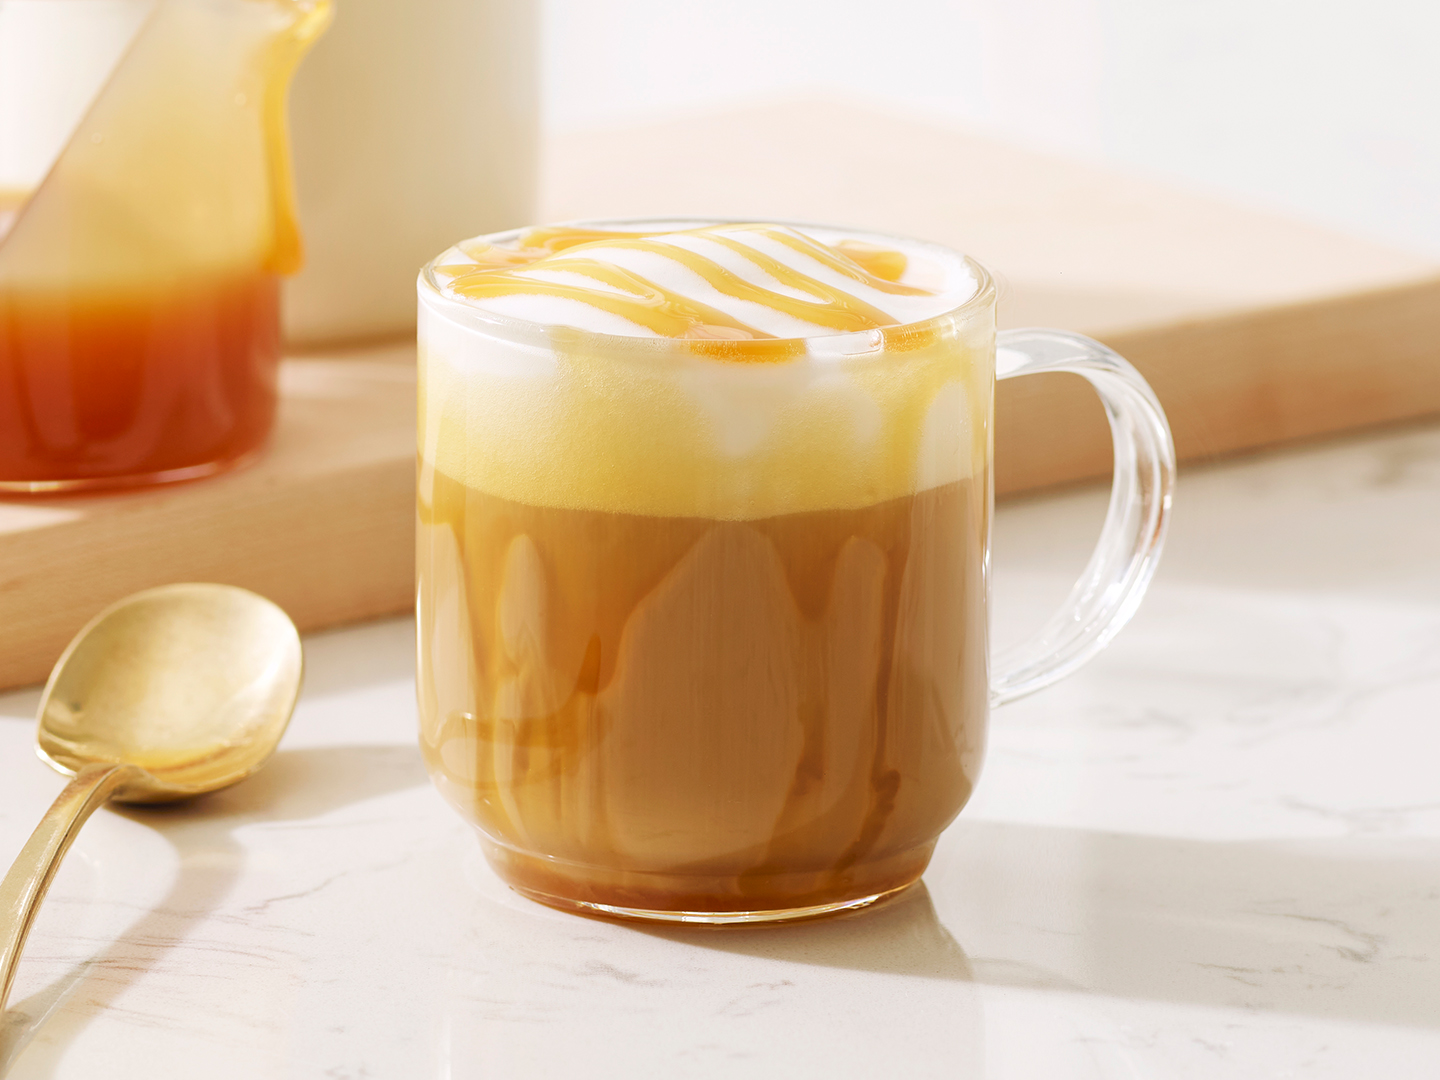 Buy latte macchiato glasses online